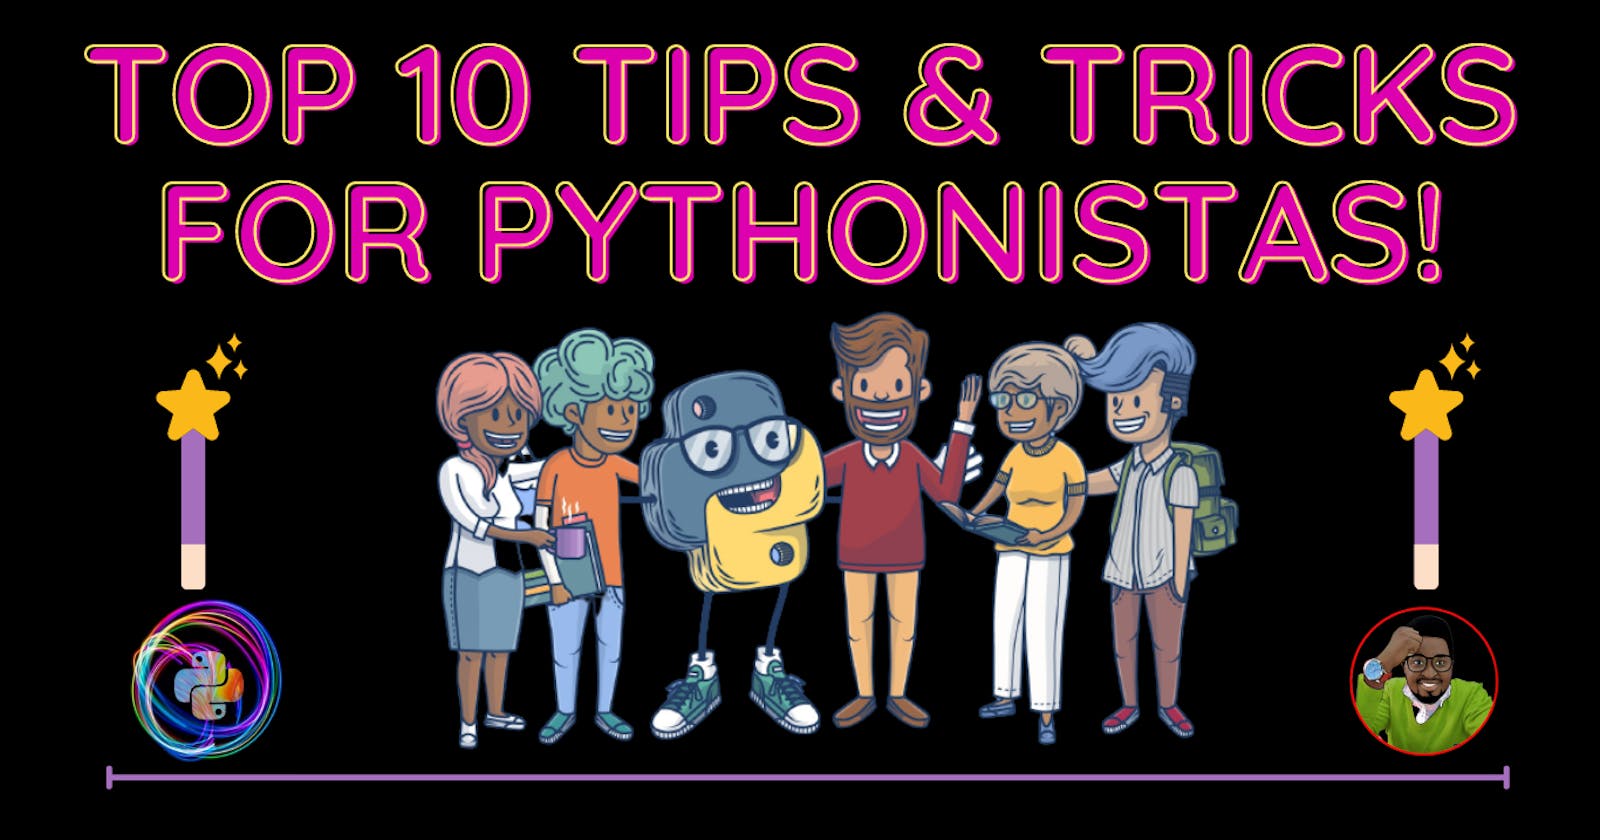 Top 10 Tips & Tricks For Pythonistas!